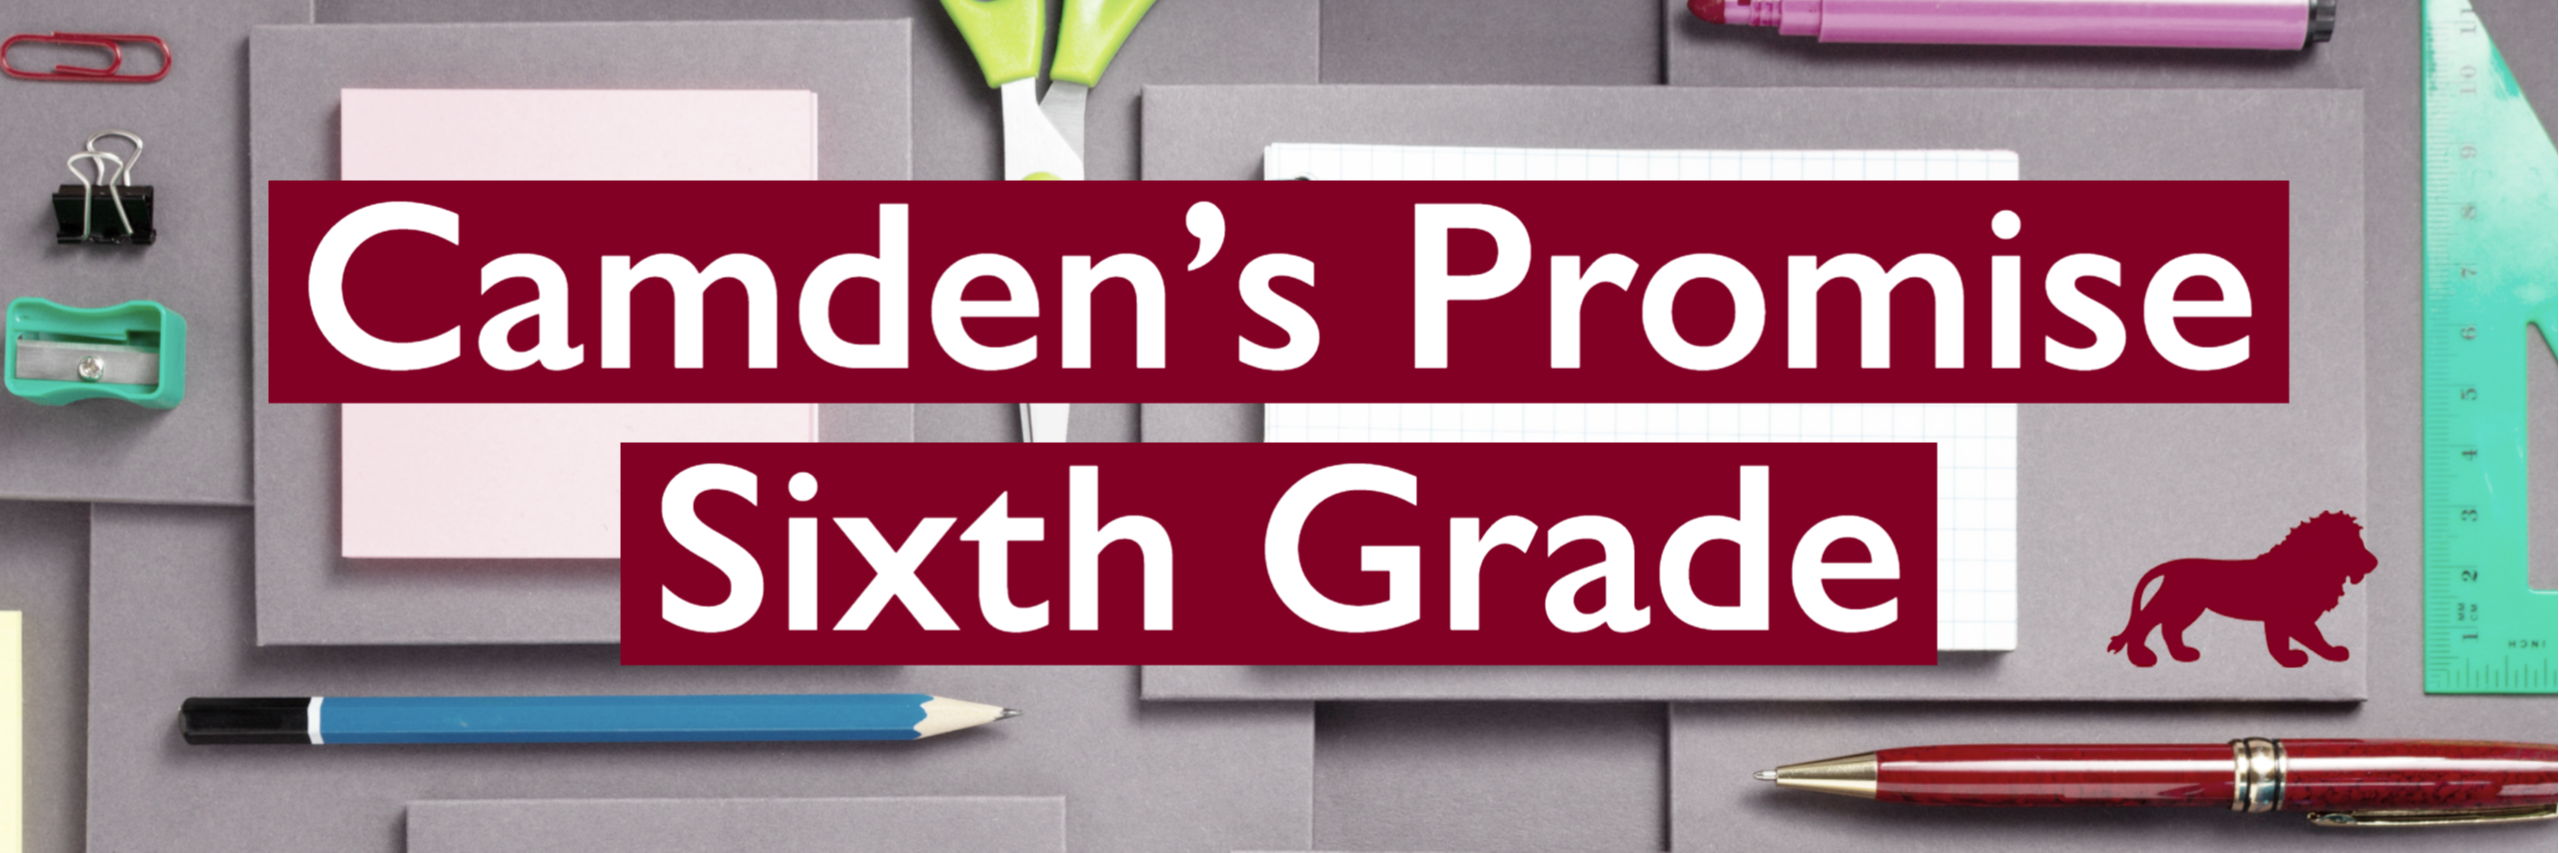 Camden's Promise Sixth Grade